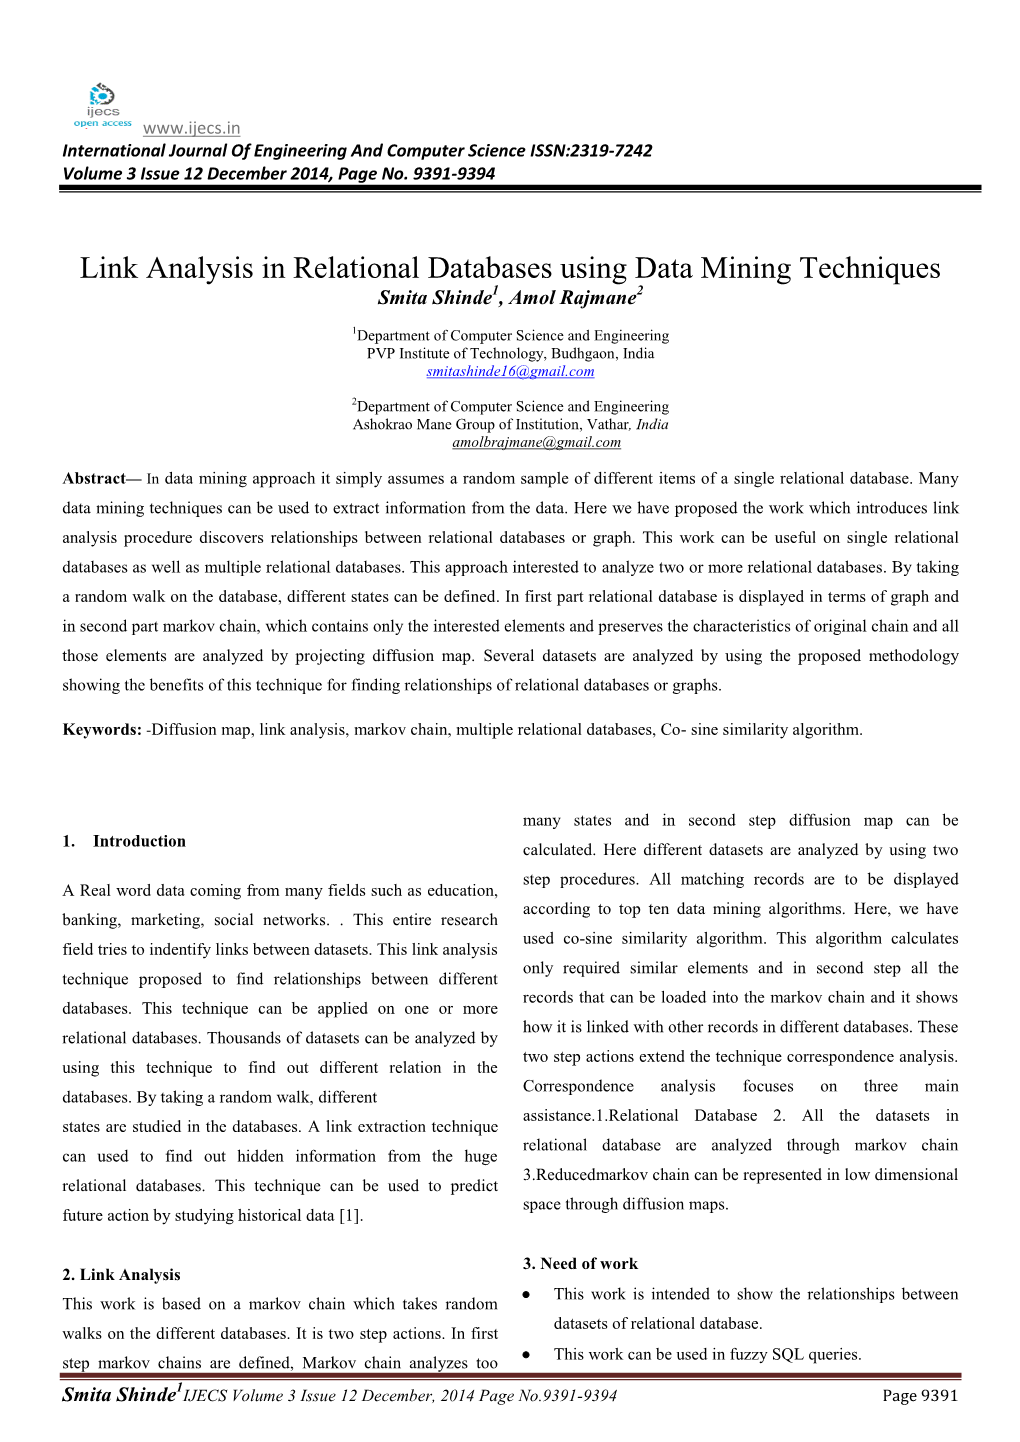 Link Analysis in Relational Databases Using Data Mining Techniques Smita Shinde1, Amol Rajmane2